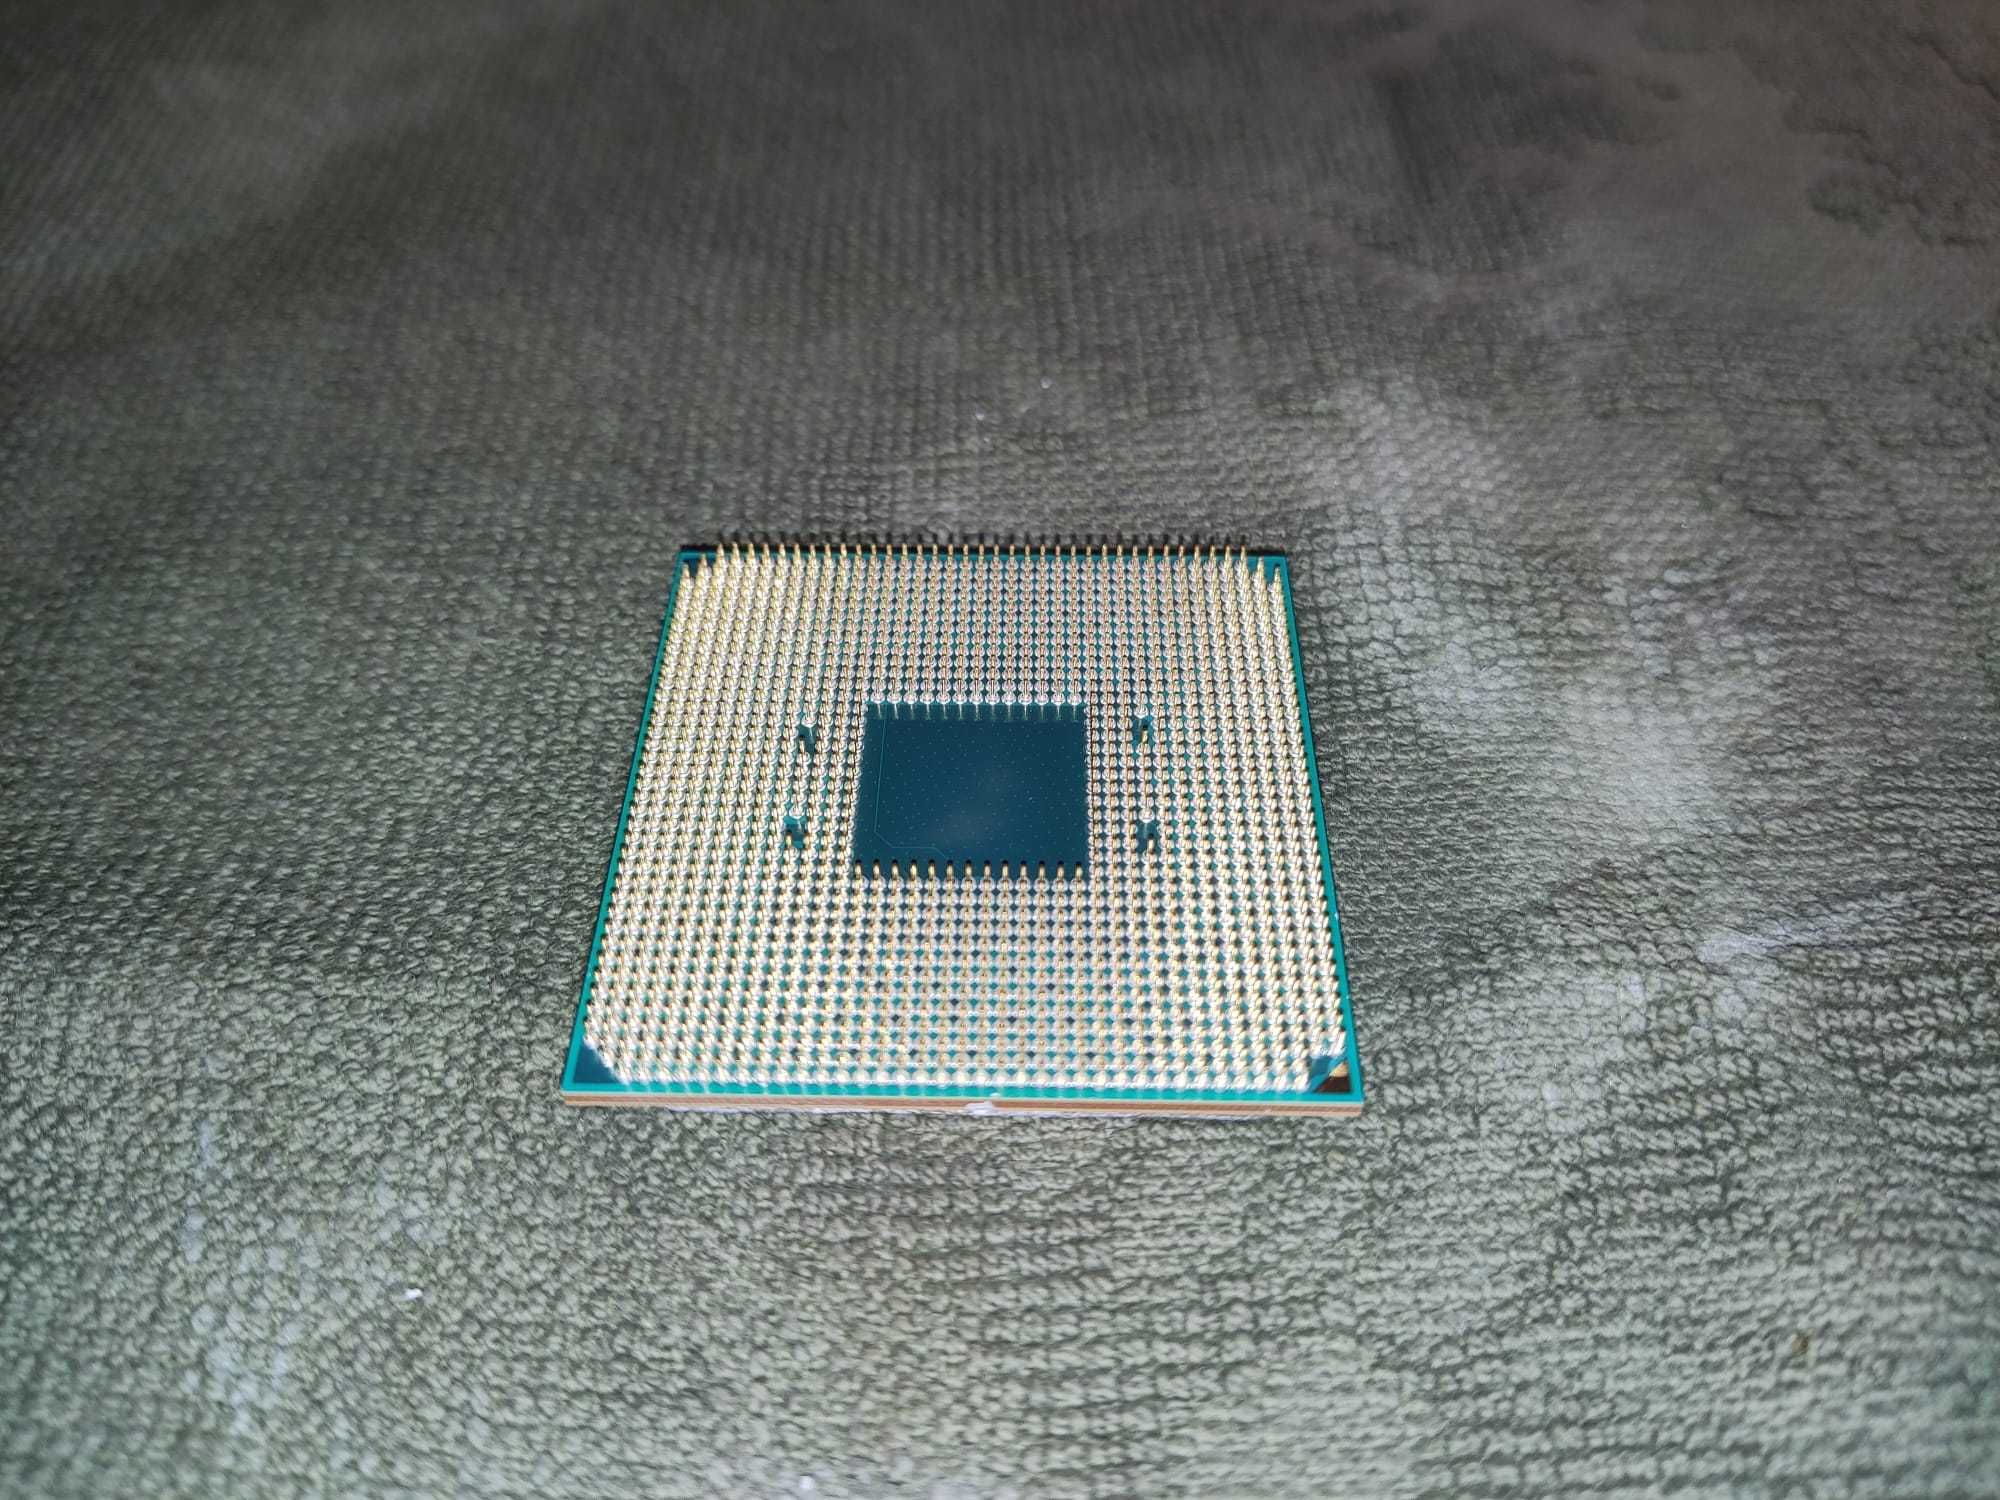 AMD Ryzen 5 1400 + Cooler